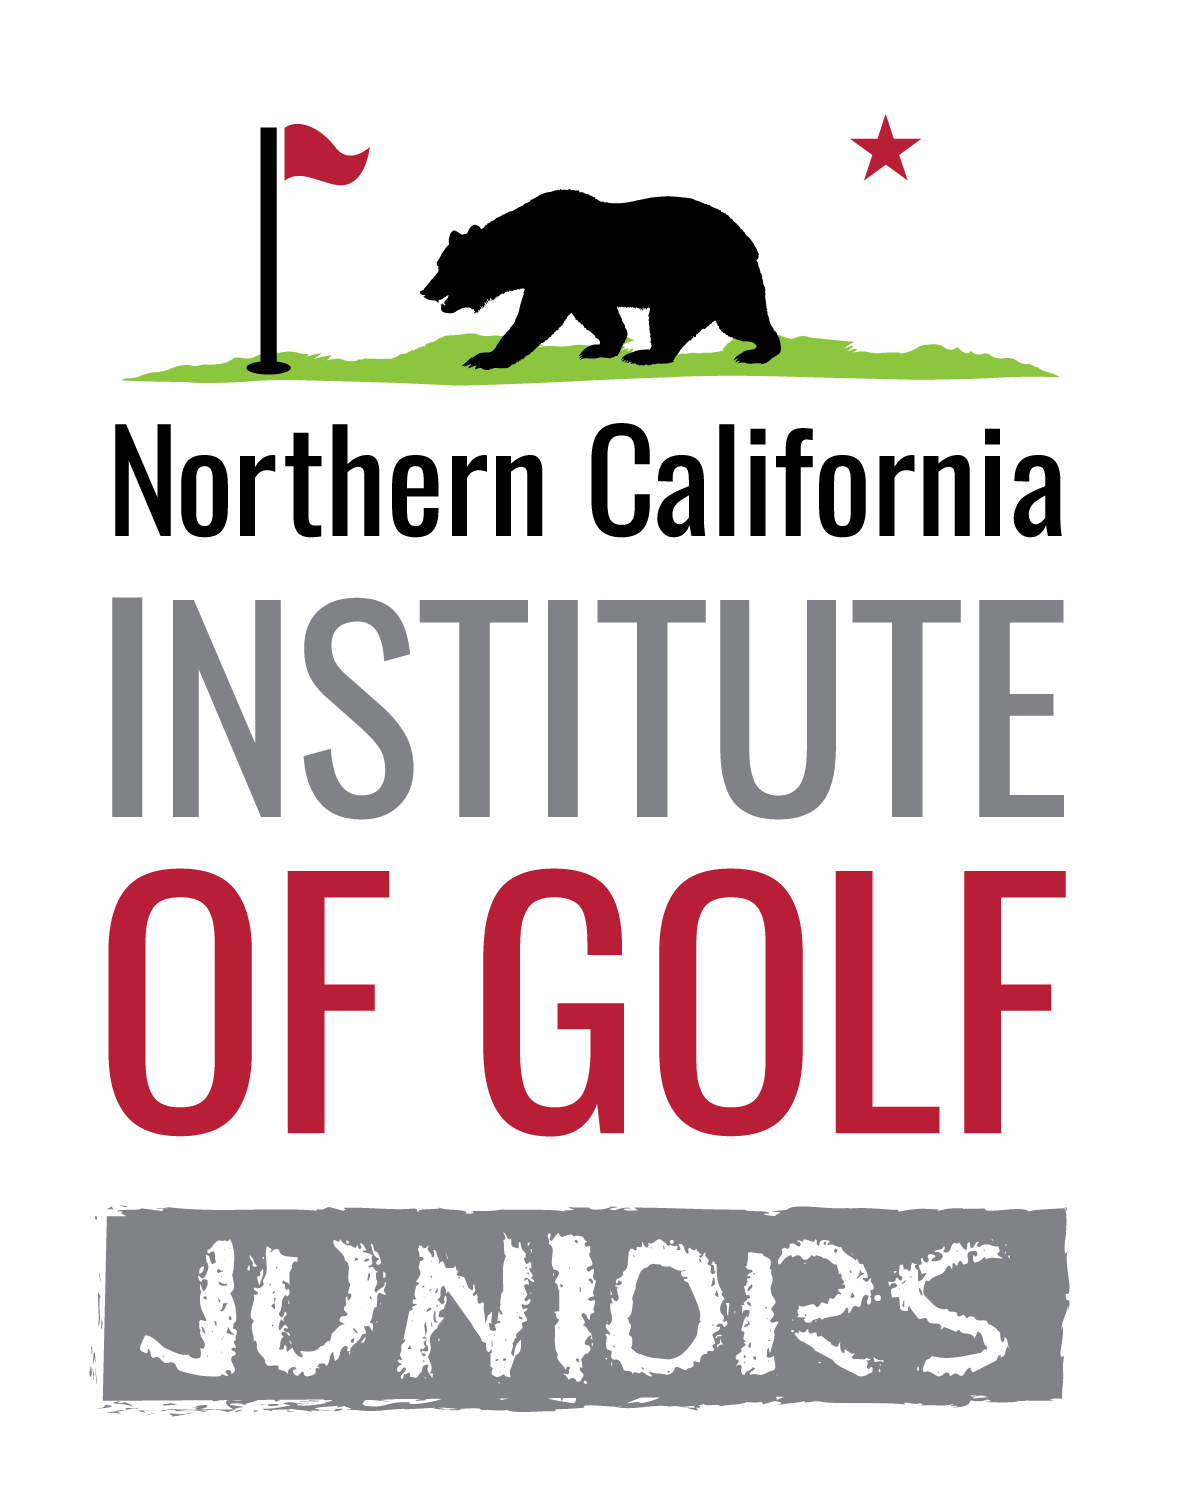 Northern California Institute of Golf